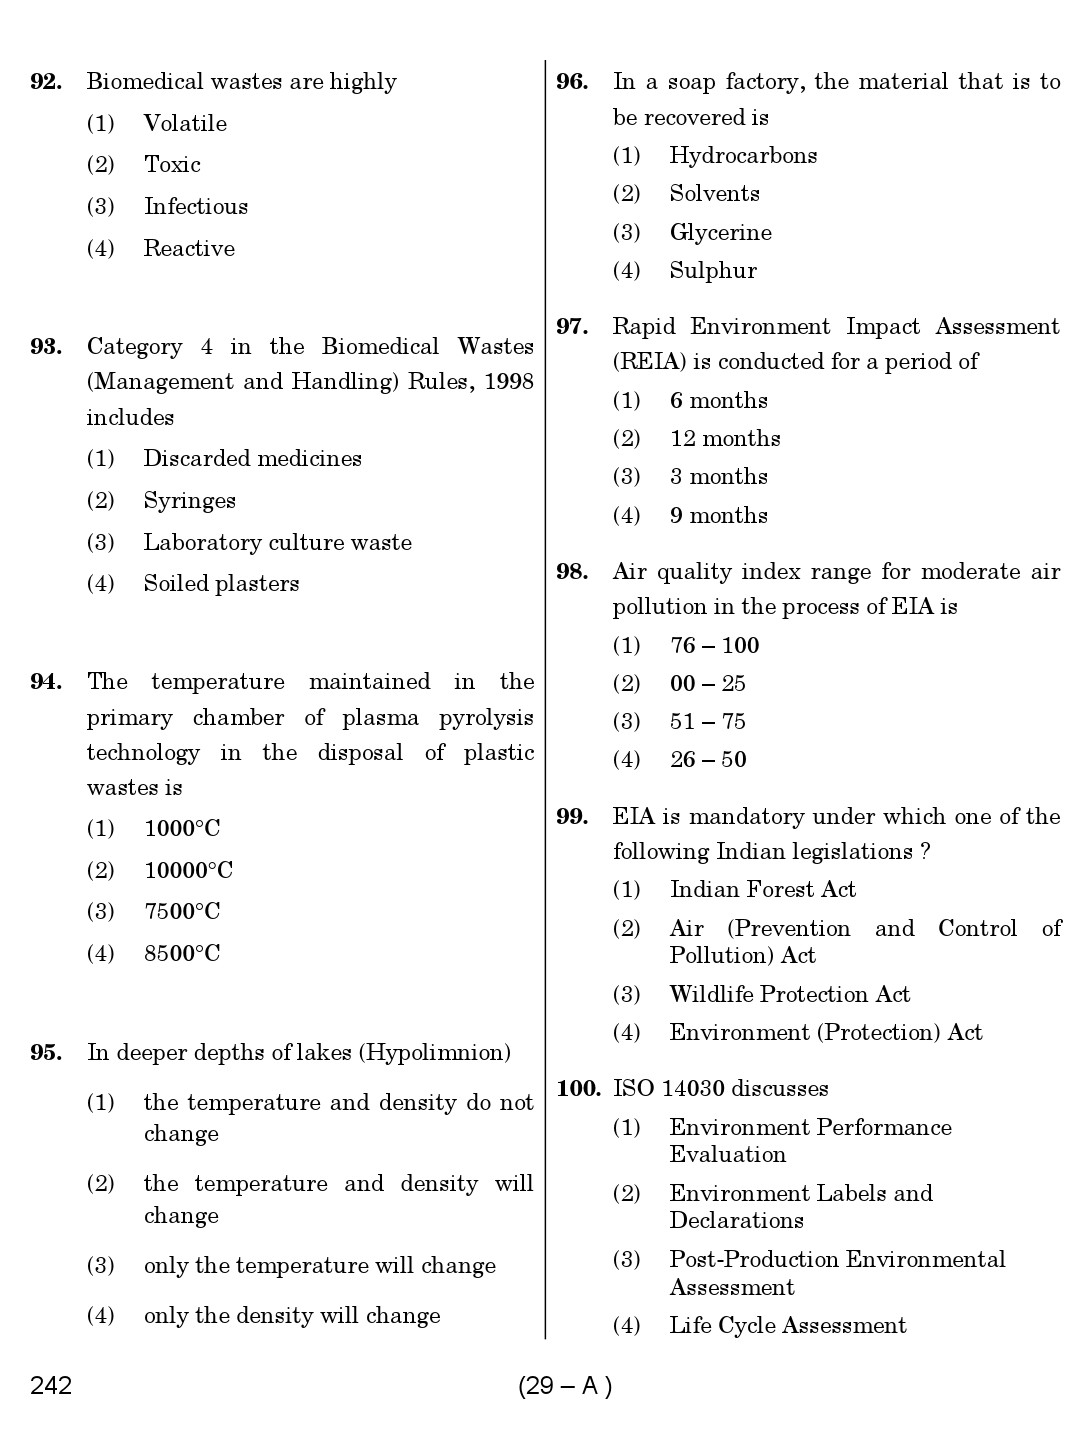 Karnataka PSC Environmental Engineer Exam Sample Question Paper 29